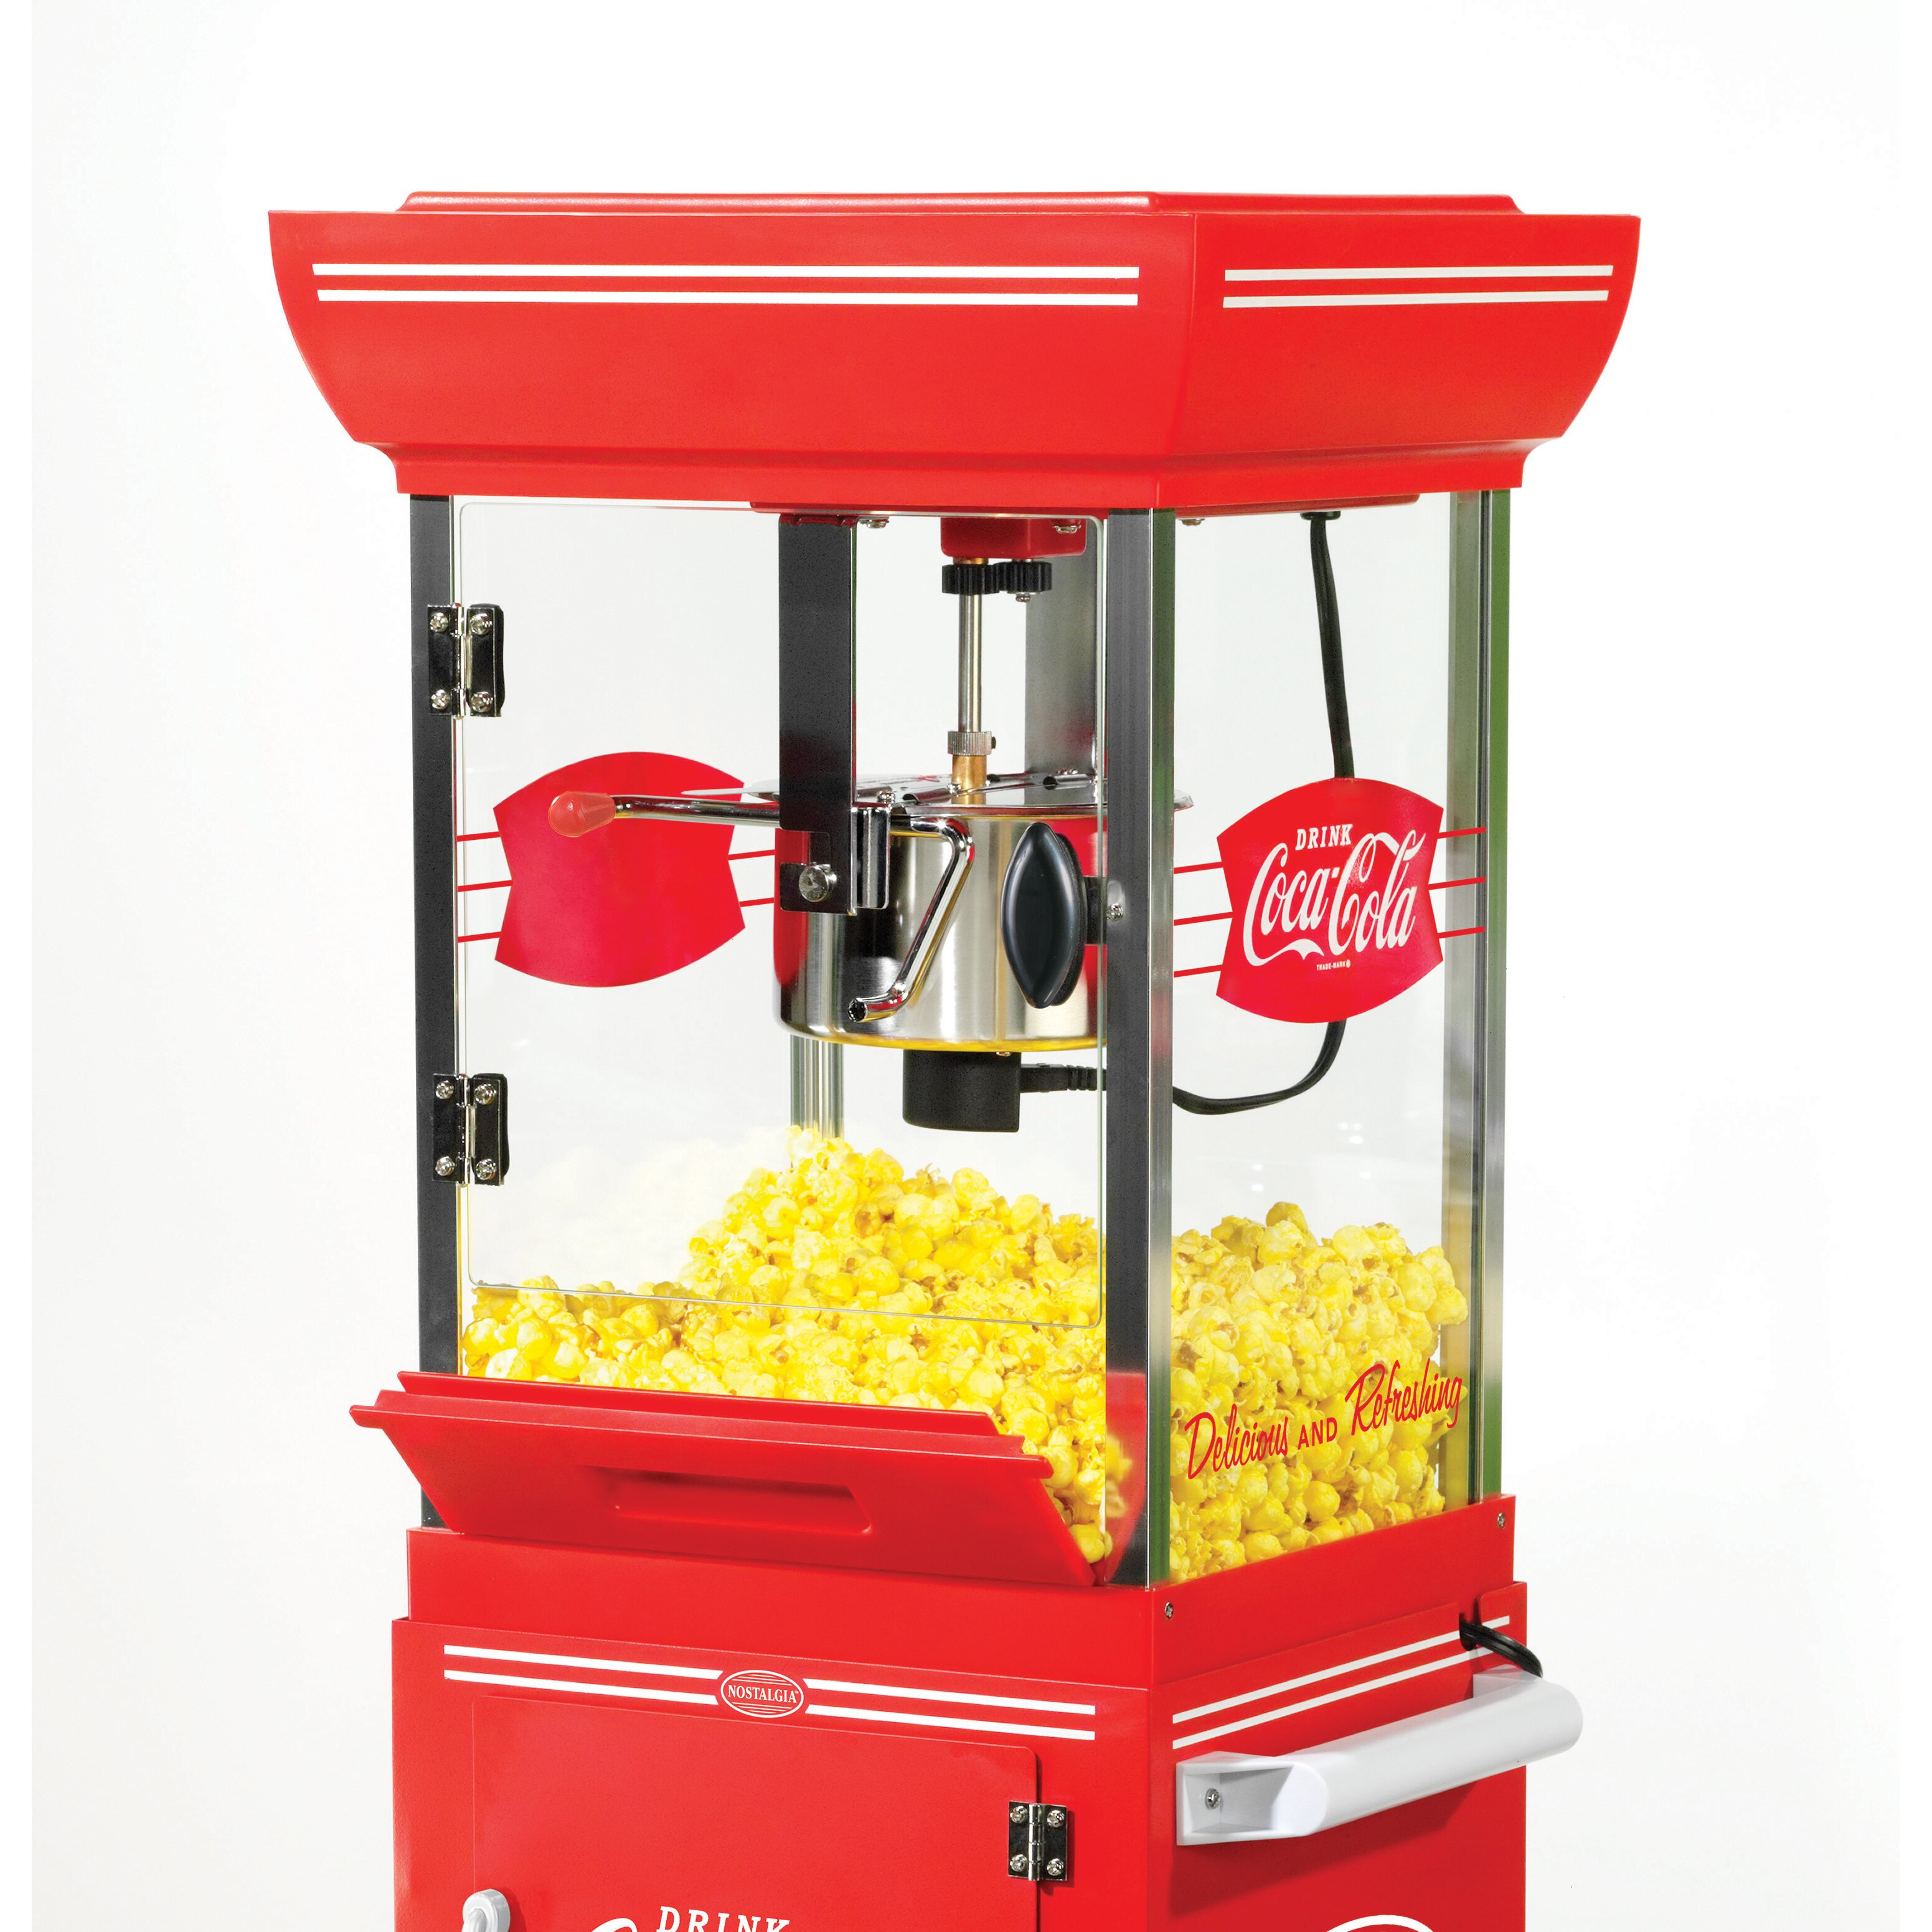 nostalgia popcorn machine and cart